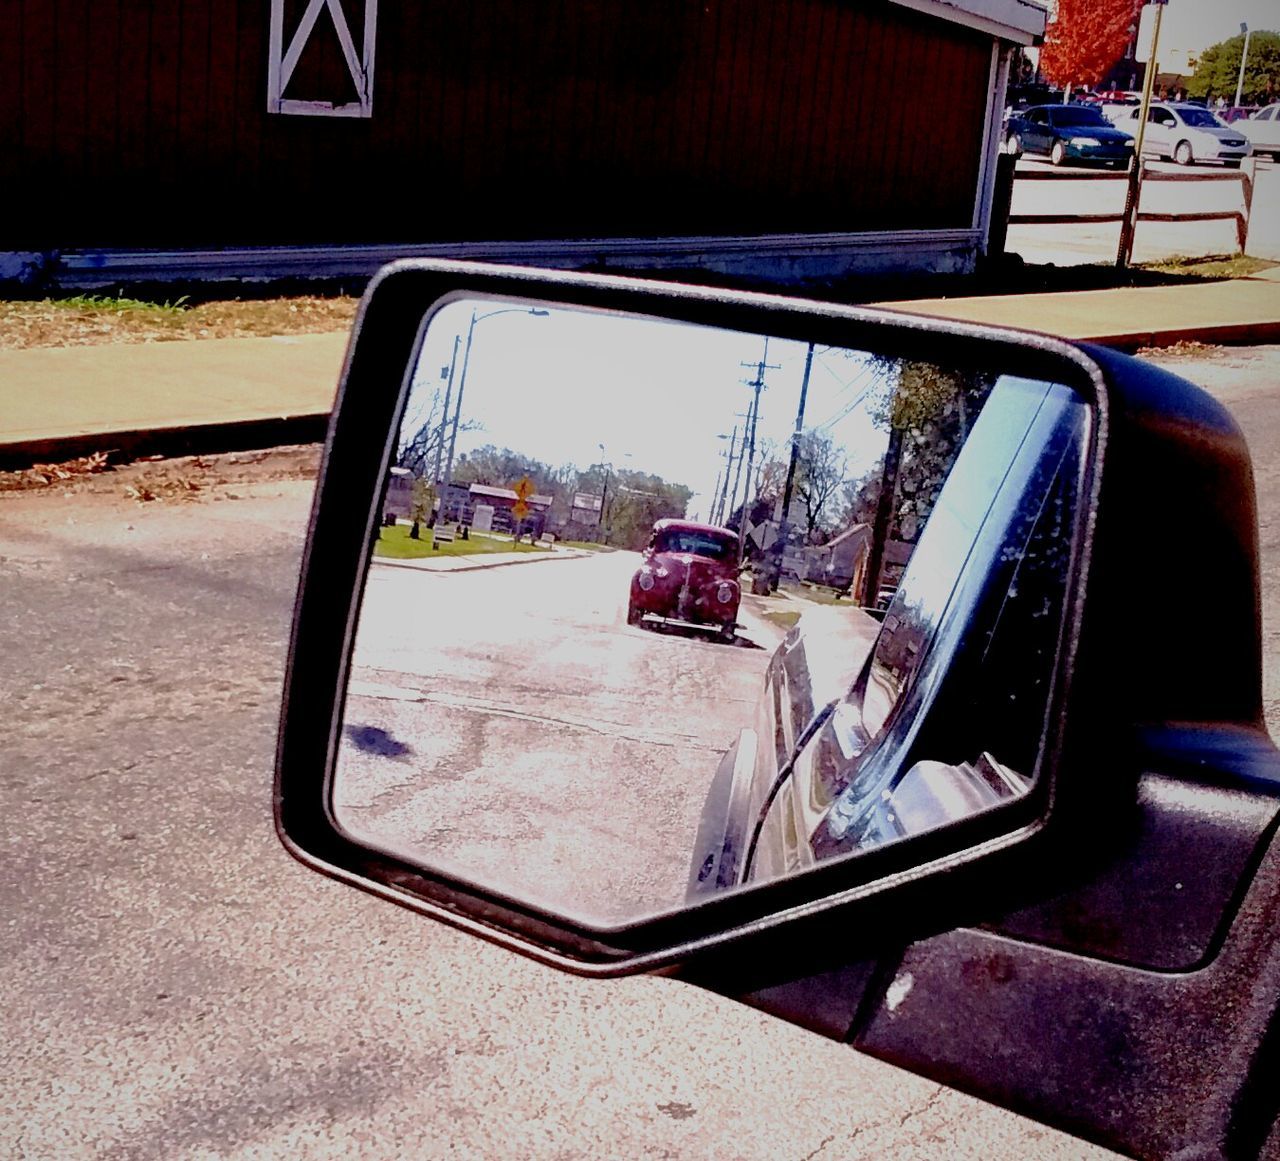 REFLECTION OF SKY ON CAR